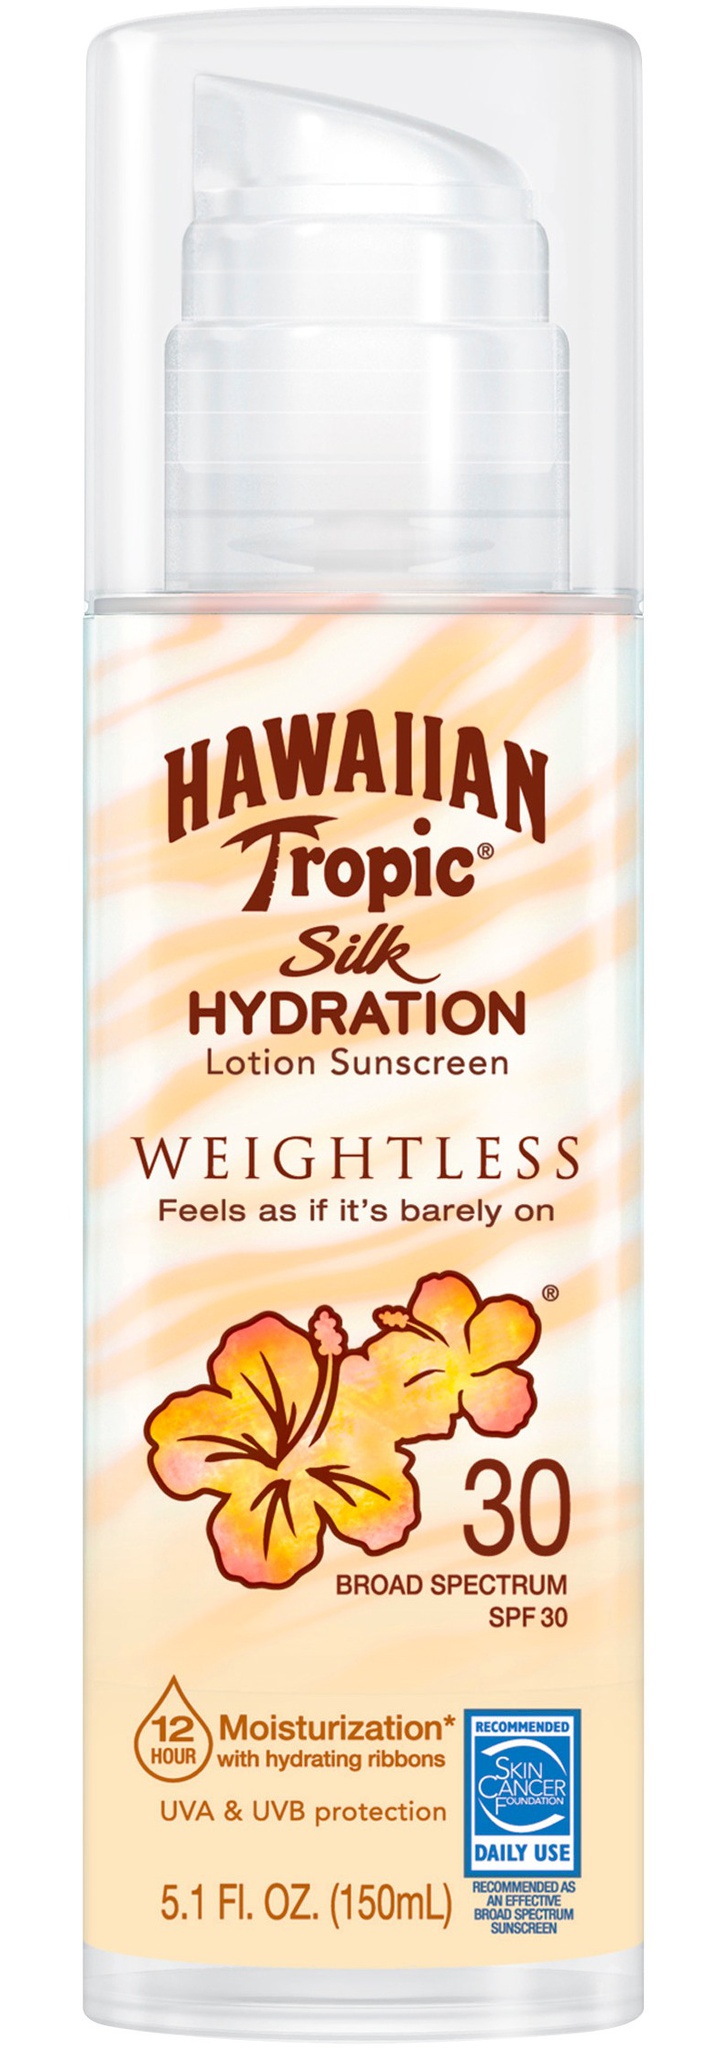 Hawaiian Tropic Silk Hydration Weightless SPF 30